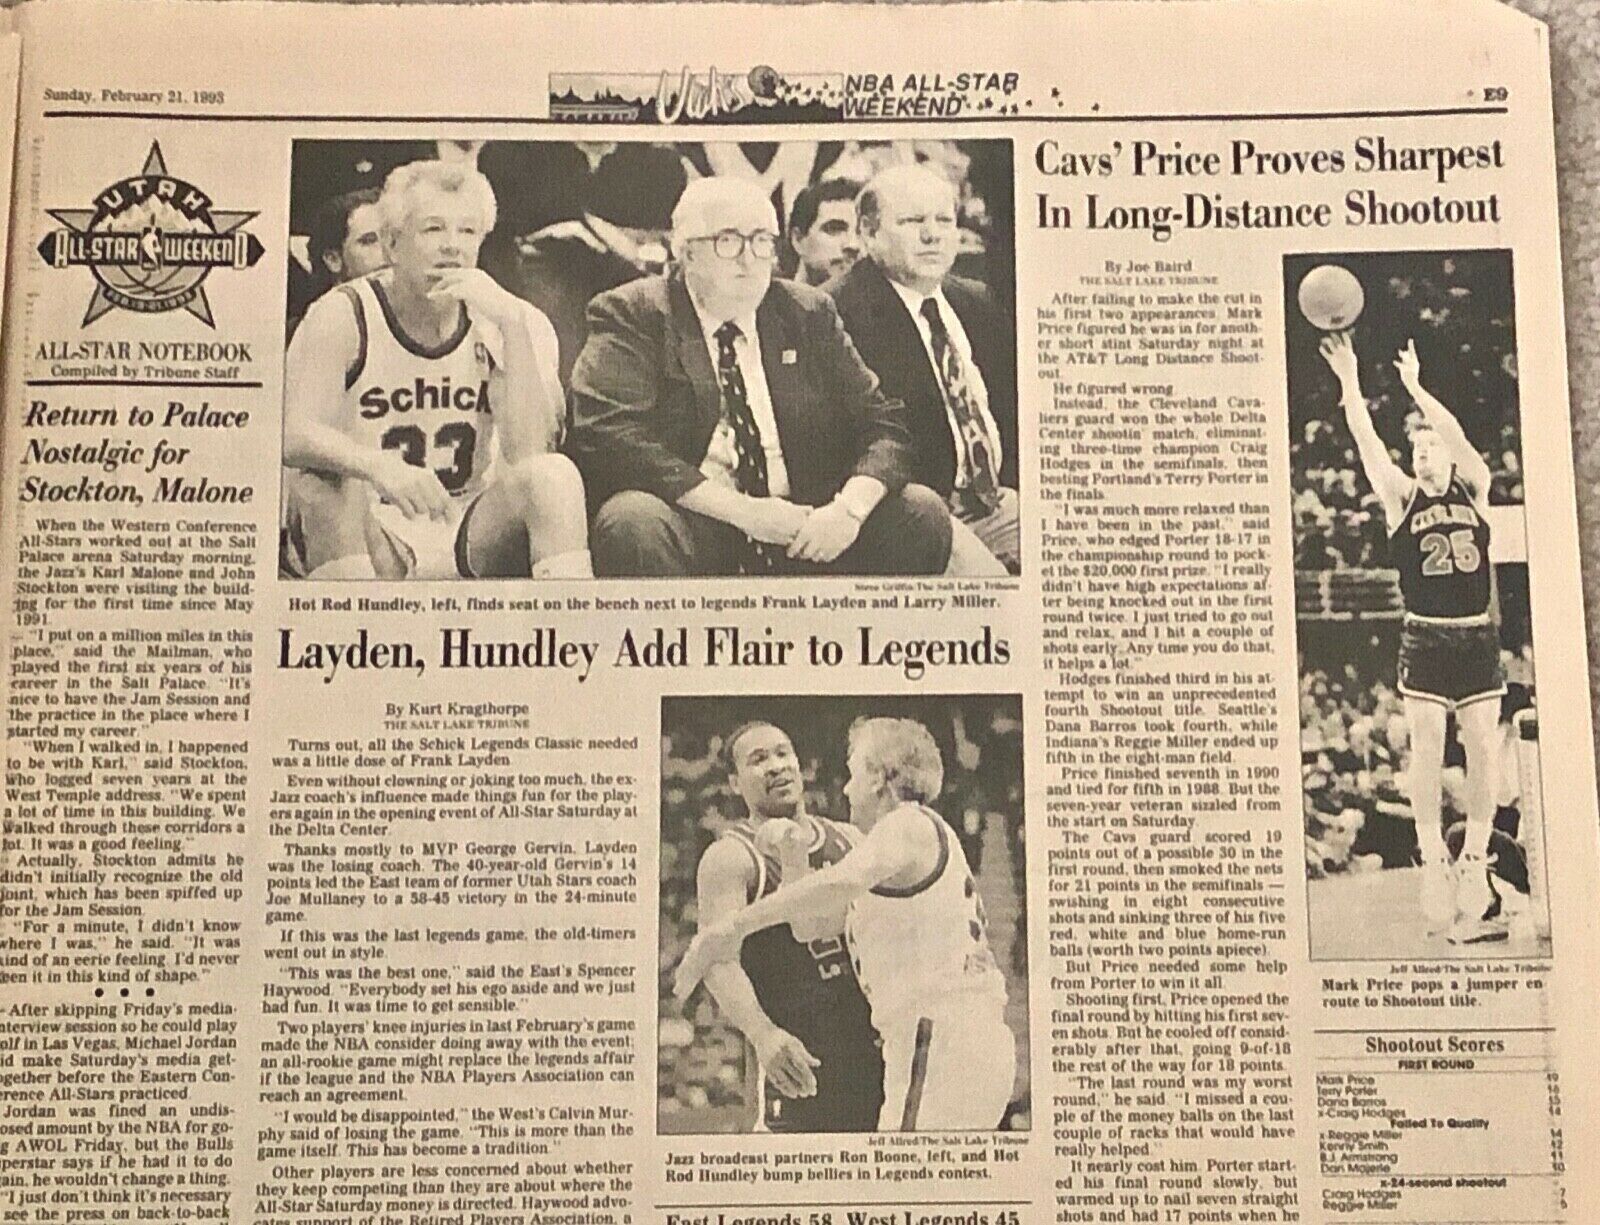 HAROLD MINER "BABY JORDAN" WINS 1993 NBA SLAM DUNK TITLE- UTAH NEWSPAPERS (2) Deseret News + Salt Lake Tribune - фотография #9